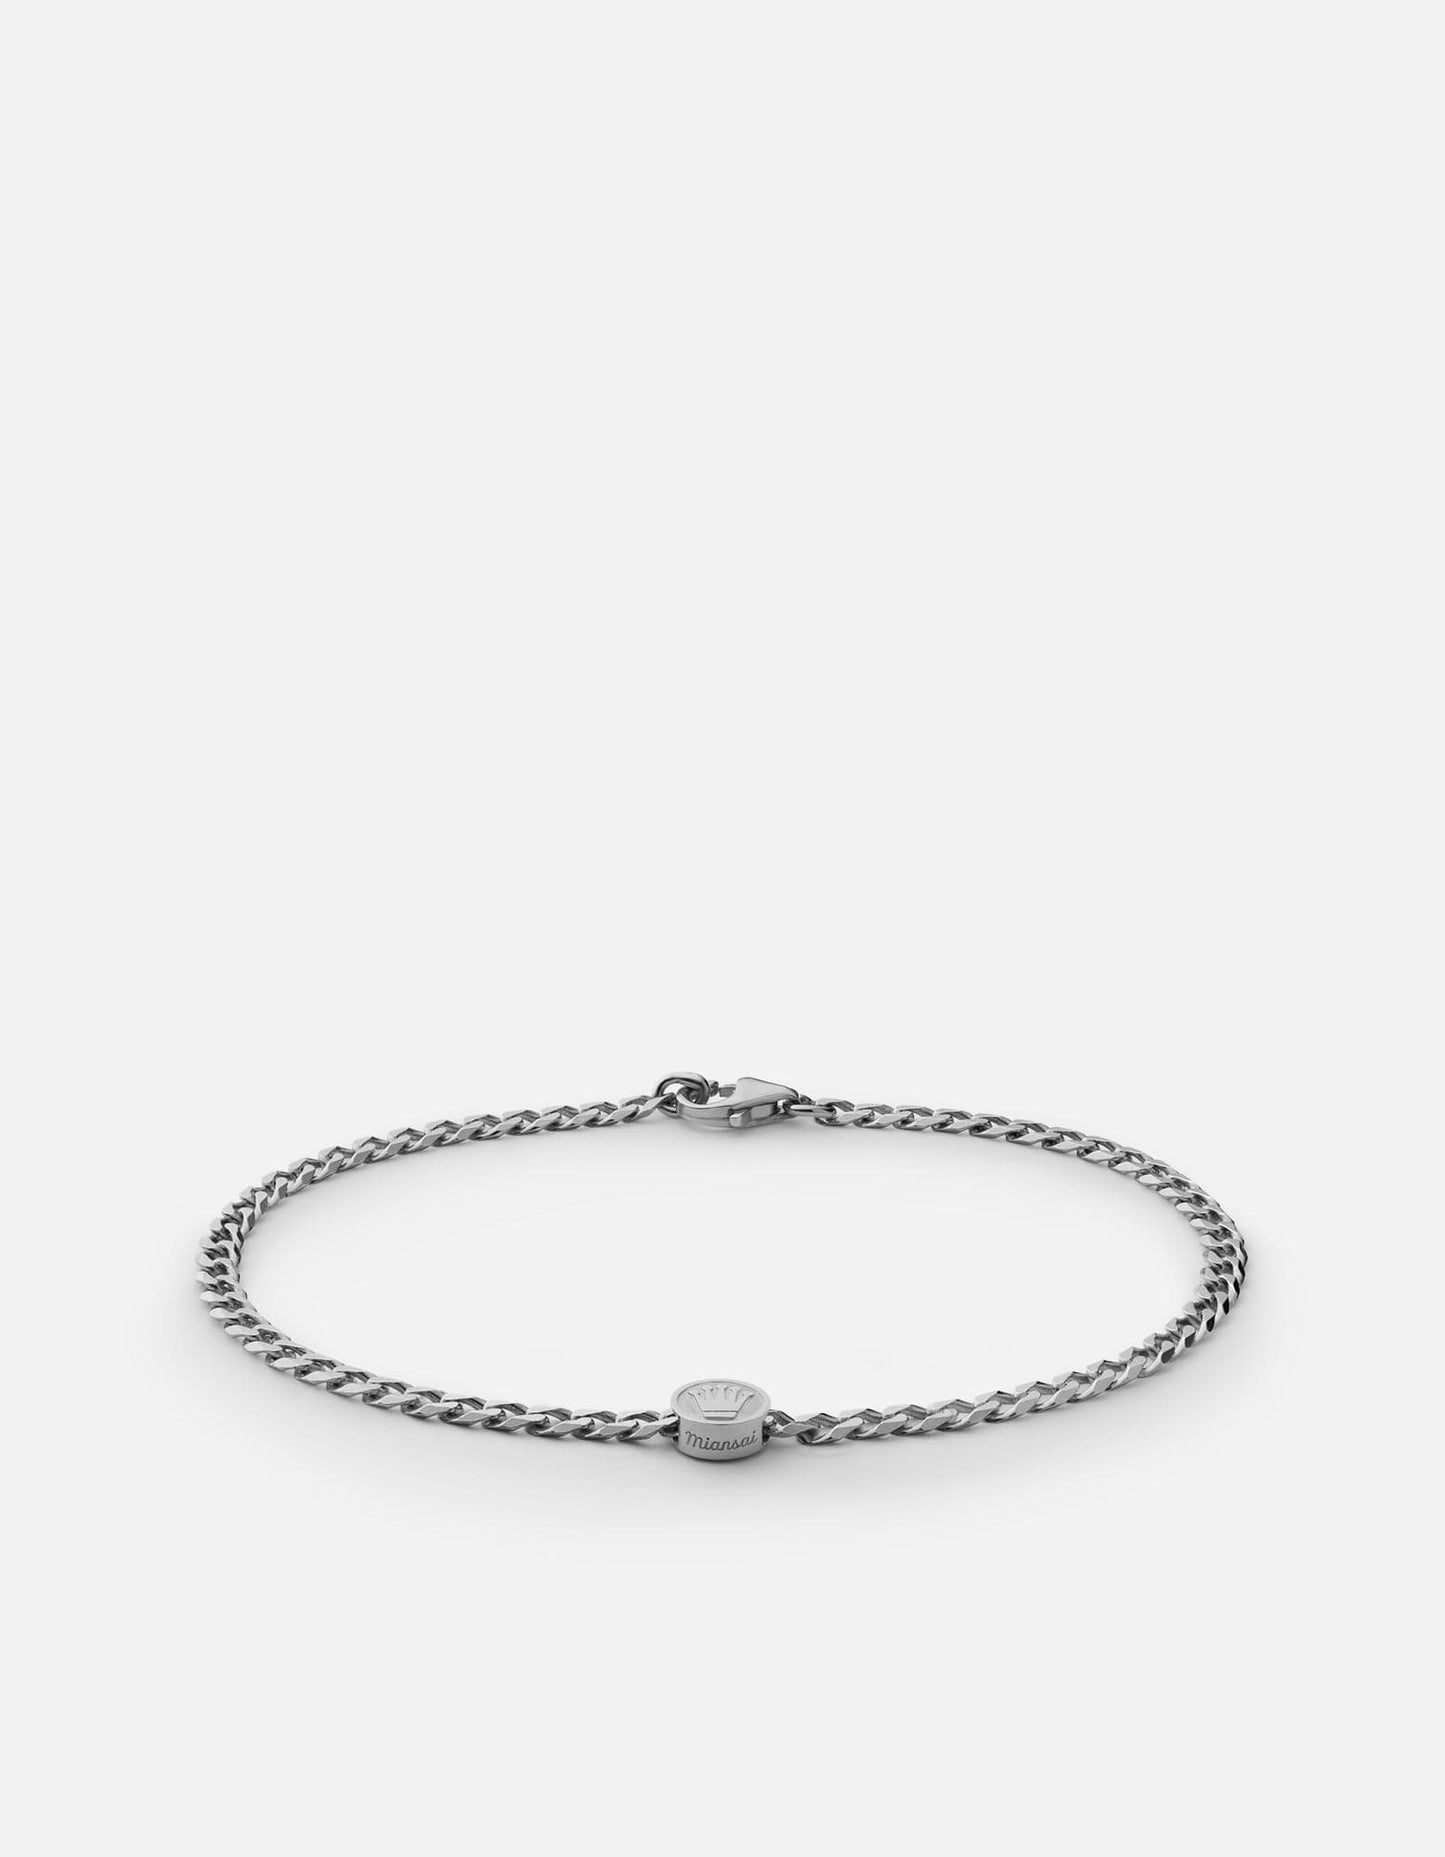 Empire Chain Bracelet, Sterling Silver